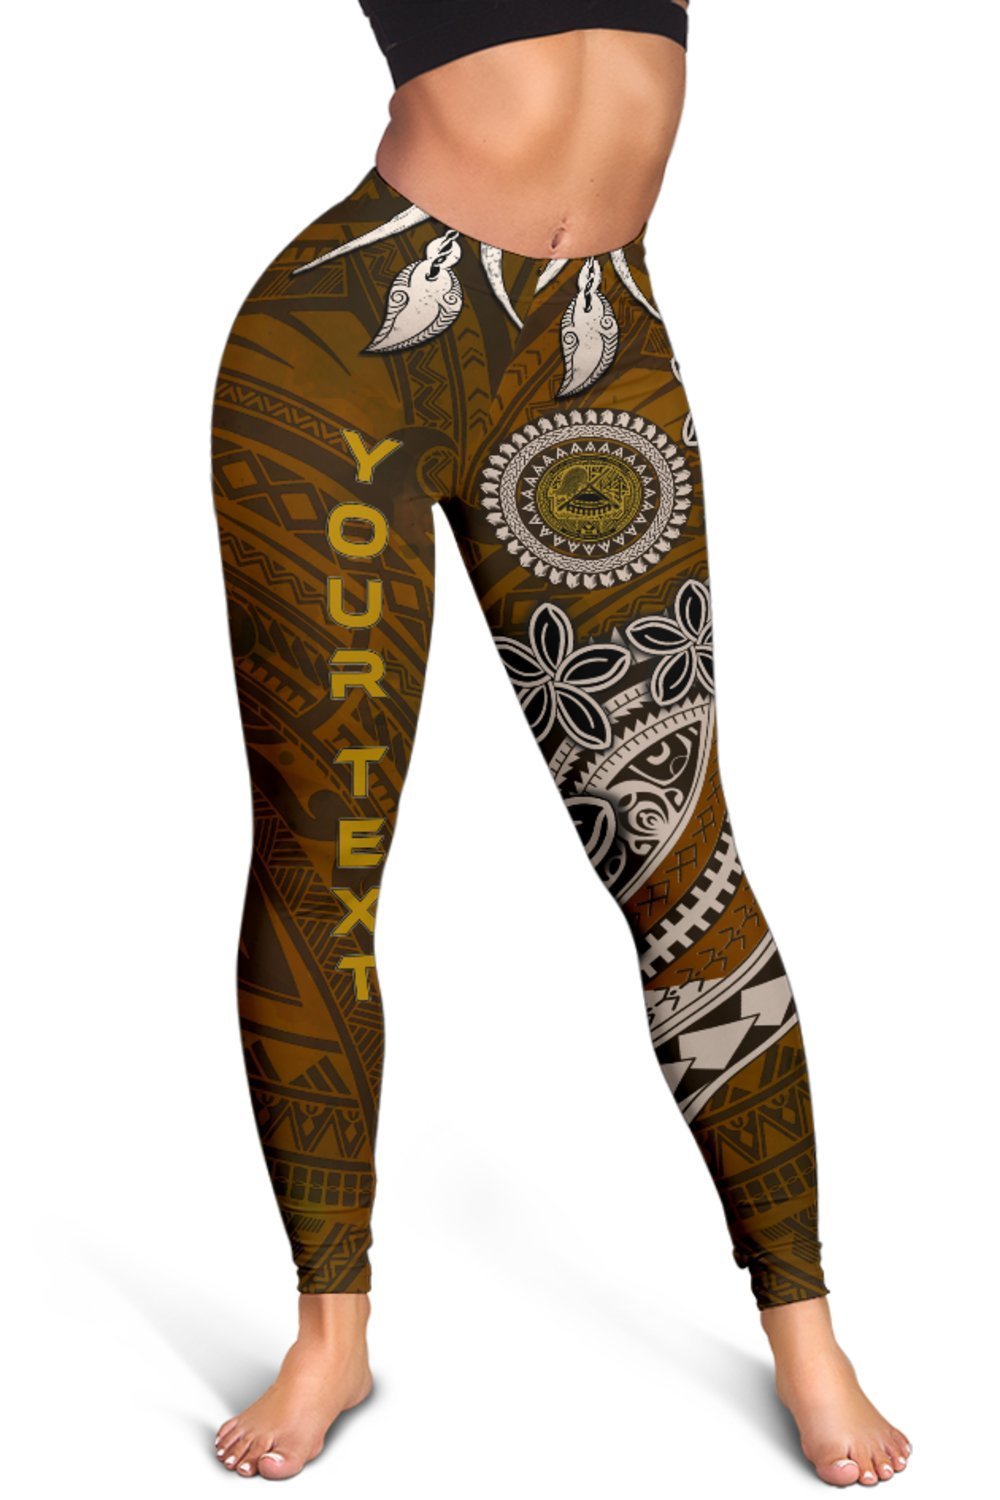 american-samoa-custom-personalised-womens-leggings-polynesian-boar-tusk